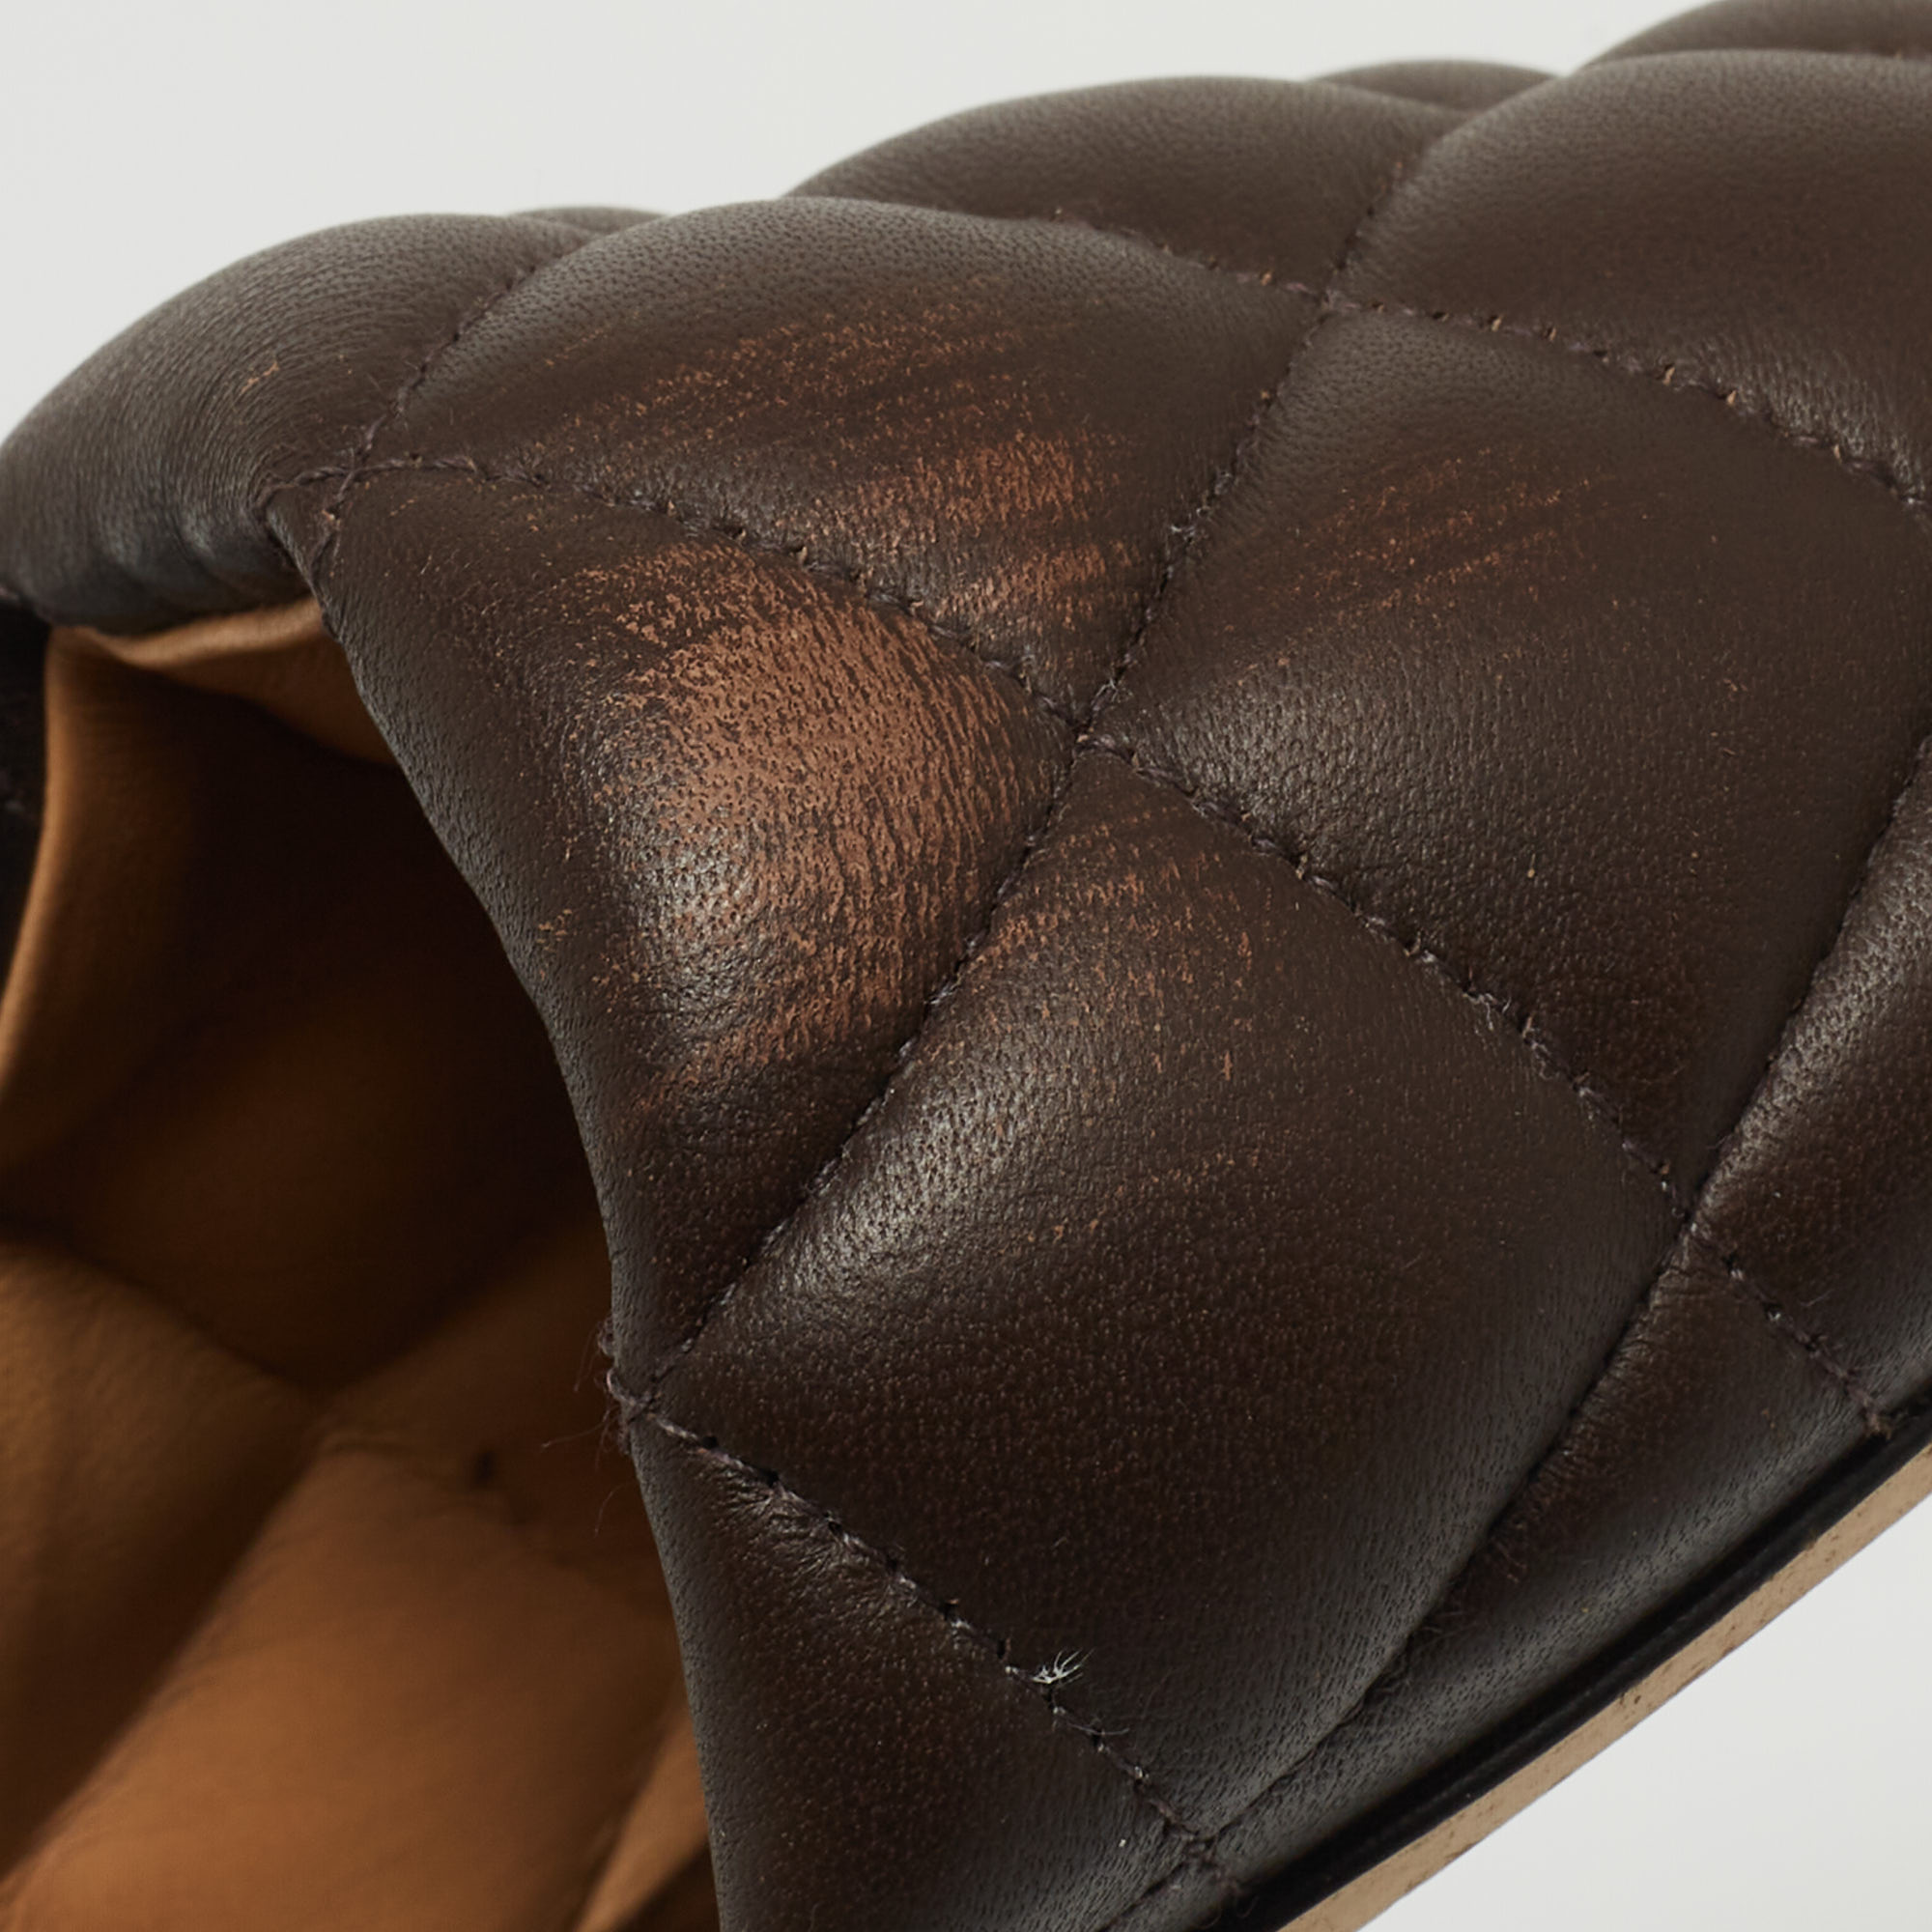 Bottega Veneta Brown Quilted Leather Lido Flat Slides Size 38